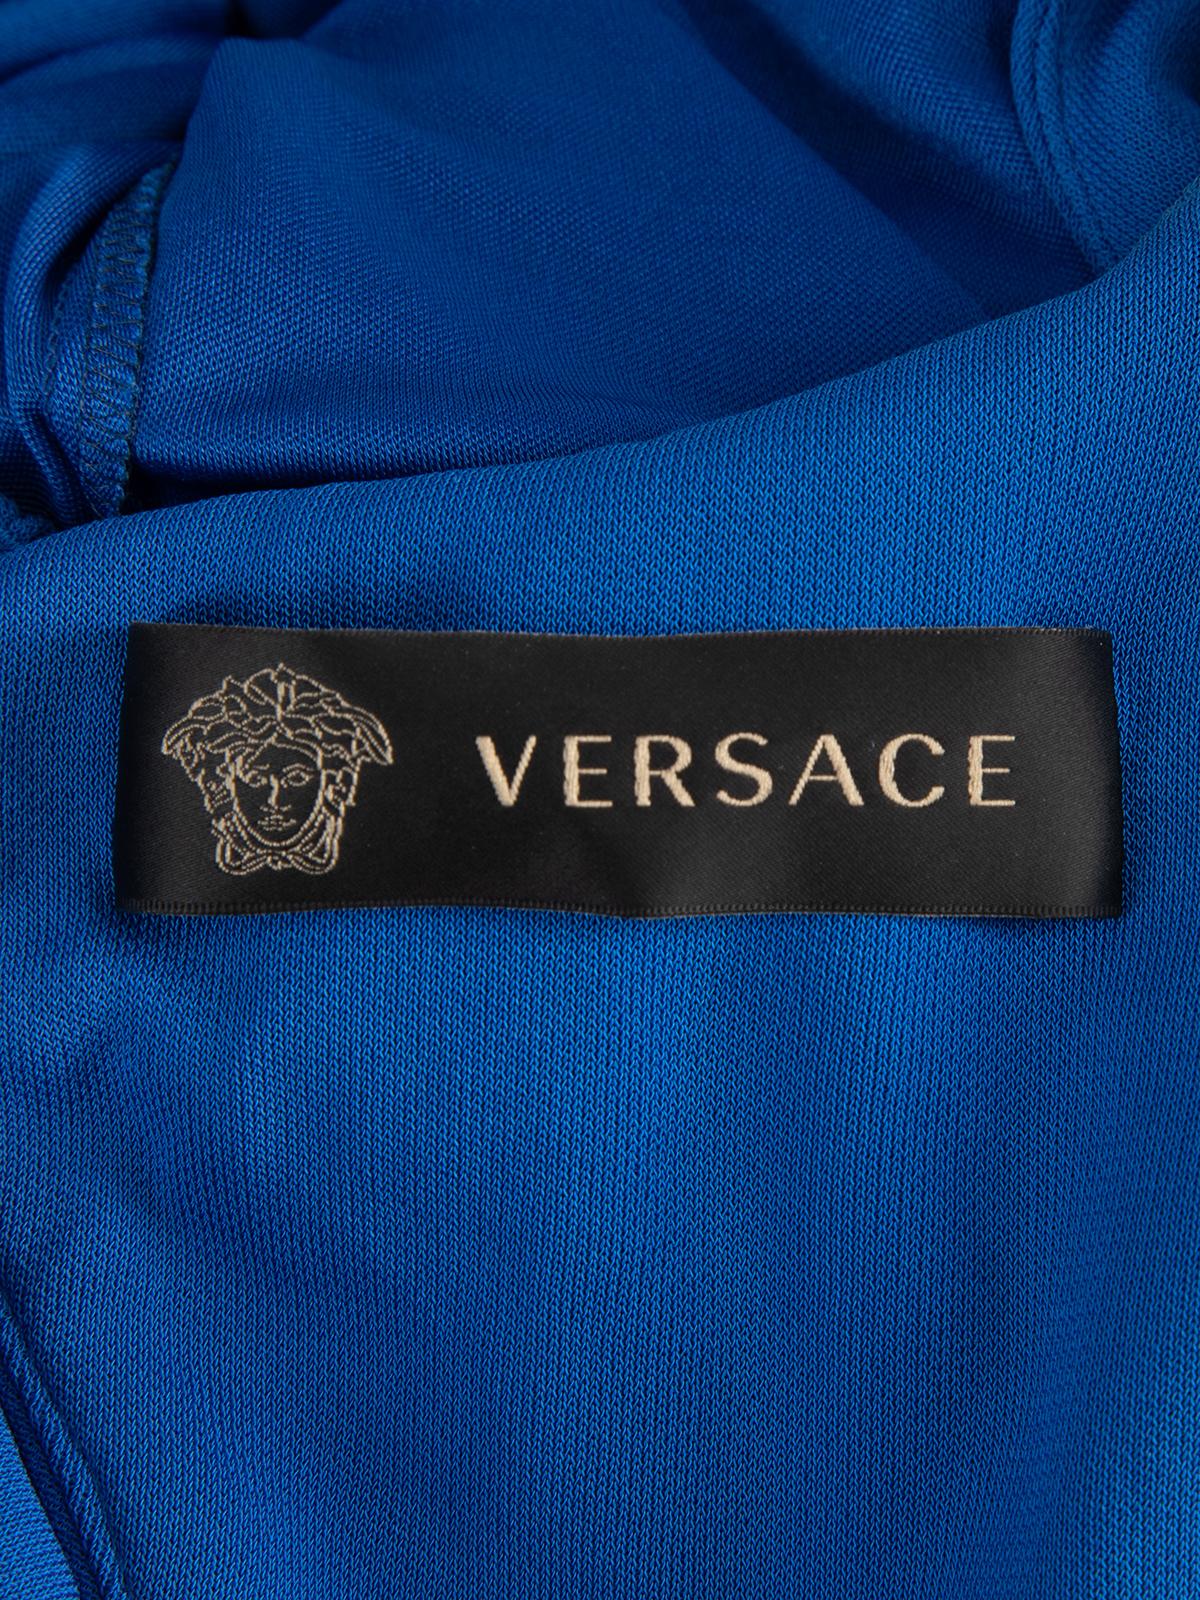 Pre-Loved Versace Women''s Ärmelloses Kleid in Knielänge im Angebot 2